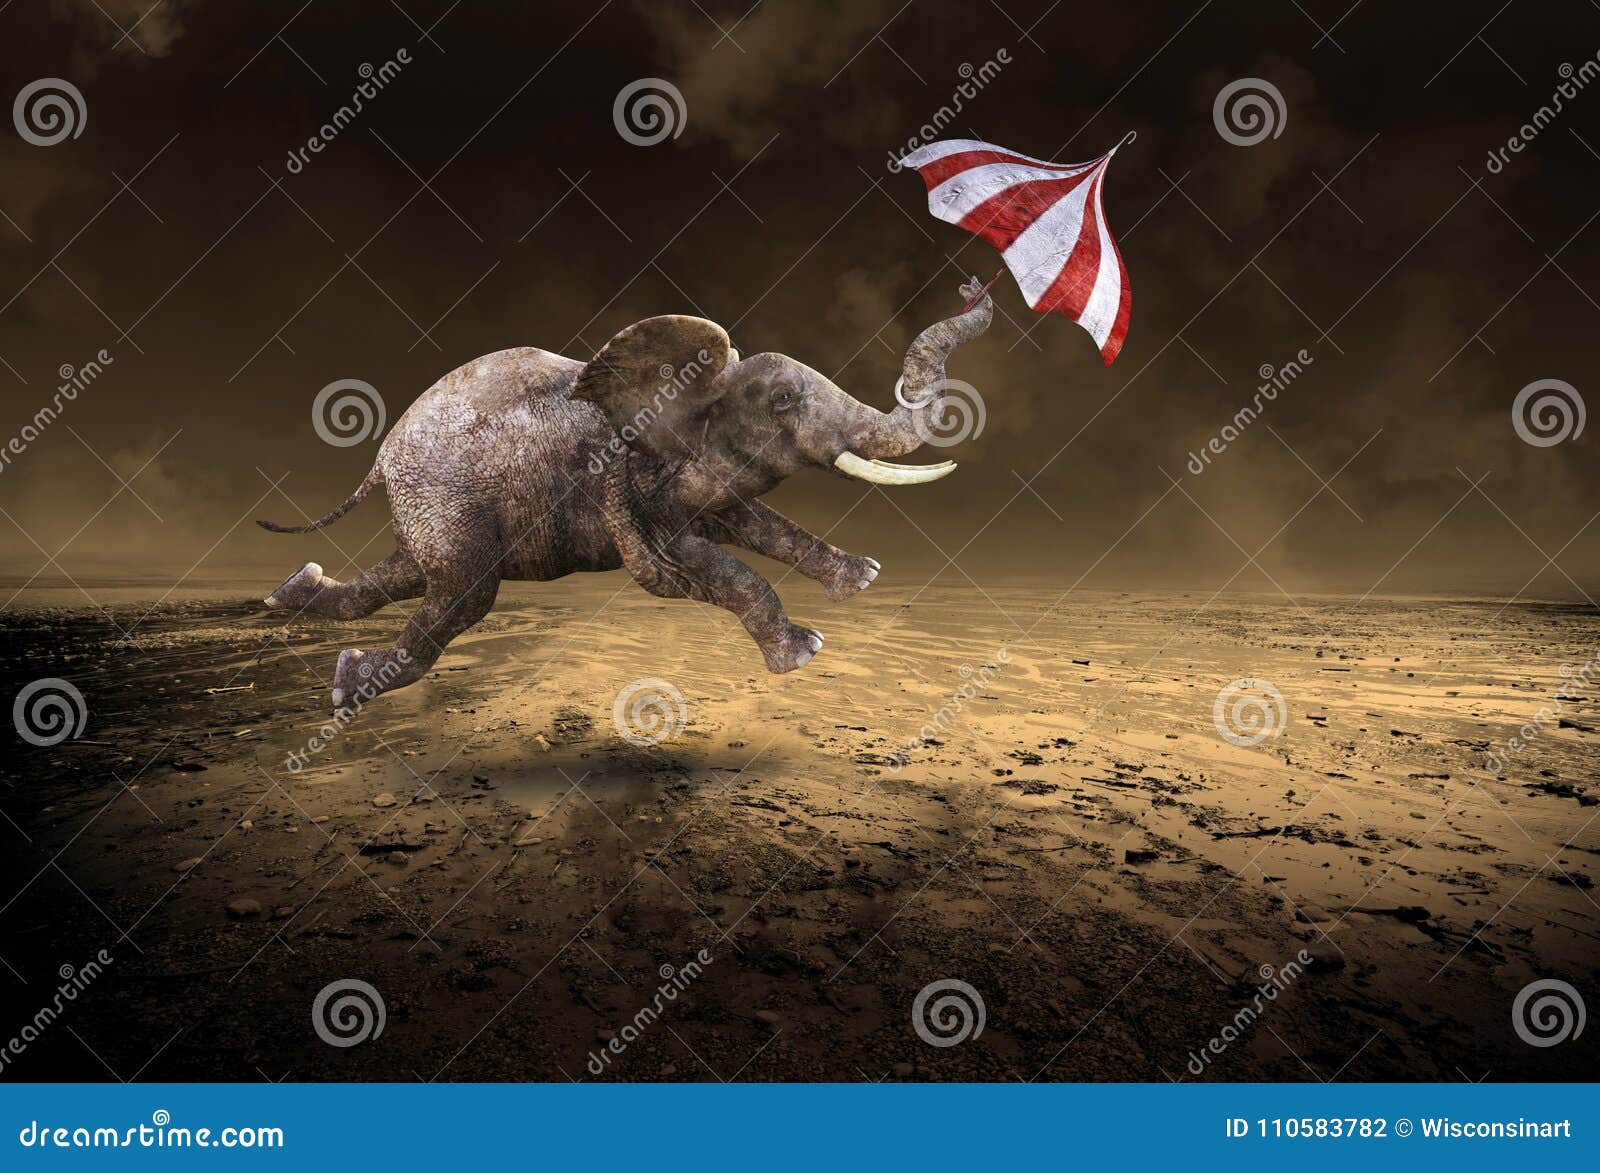 surreal flying elephant, desolate desert